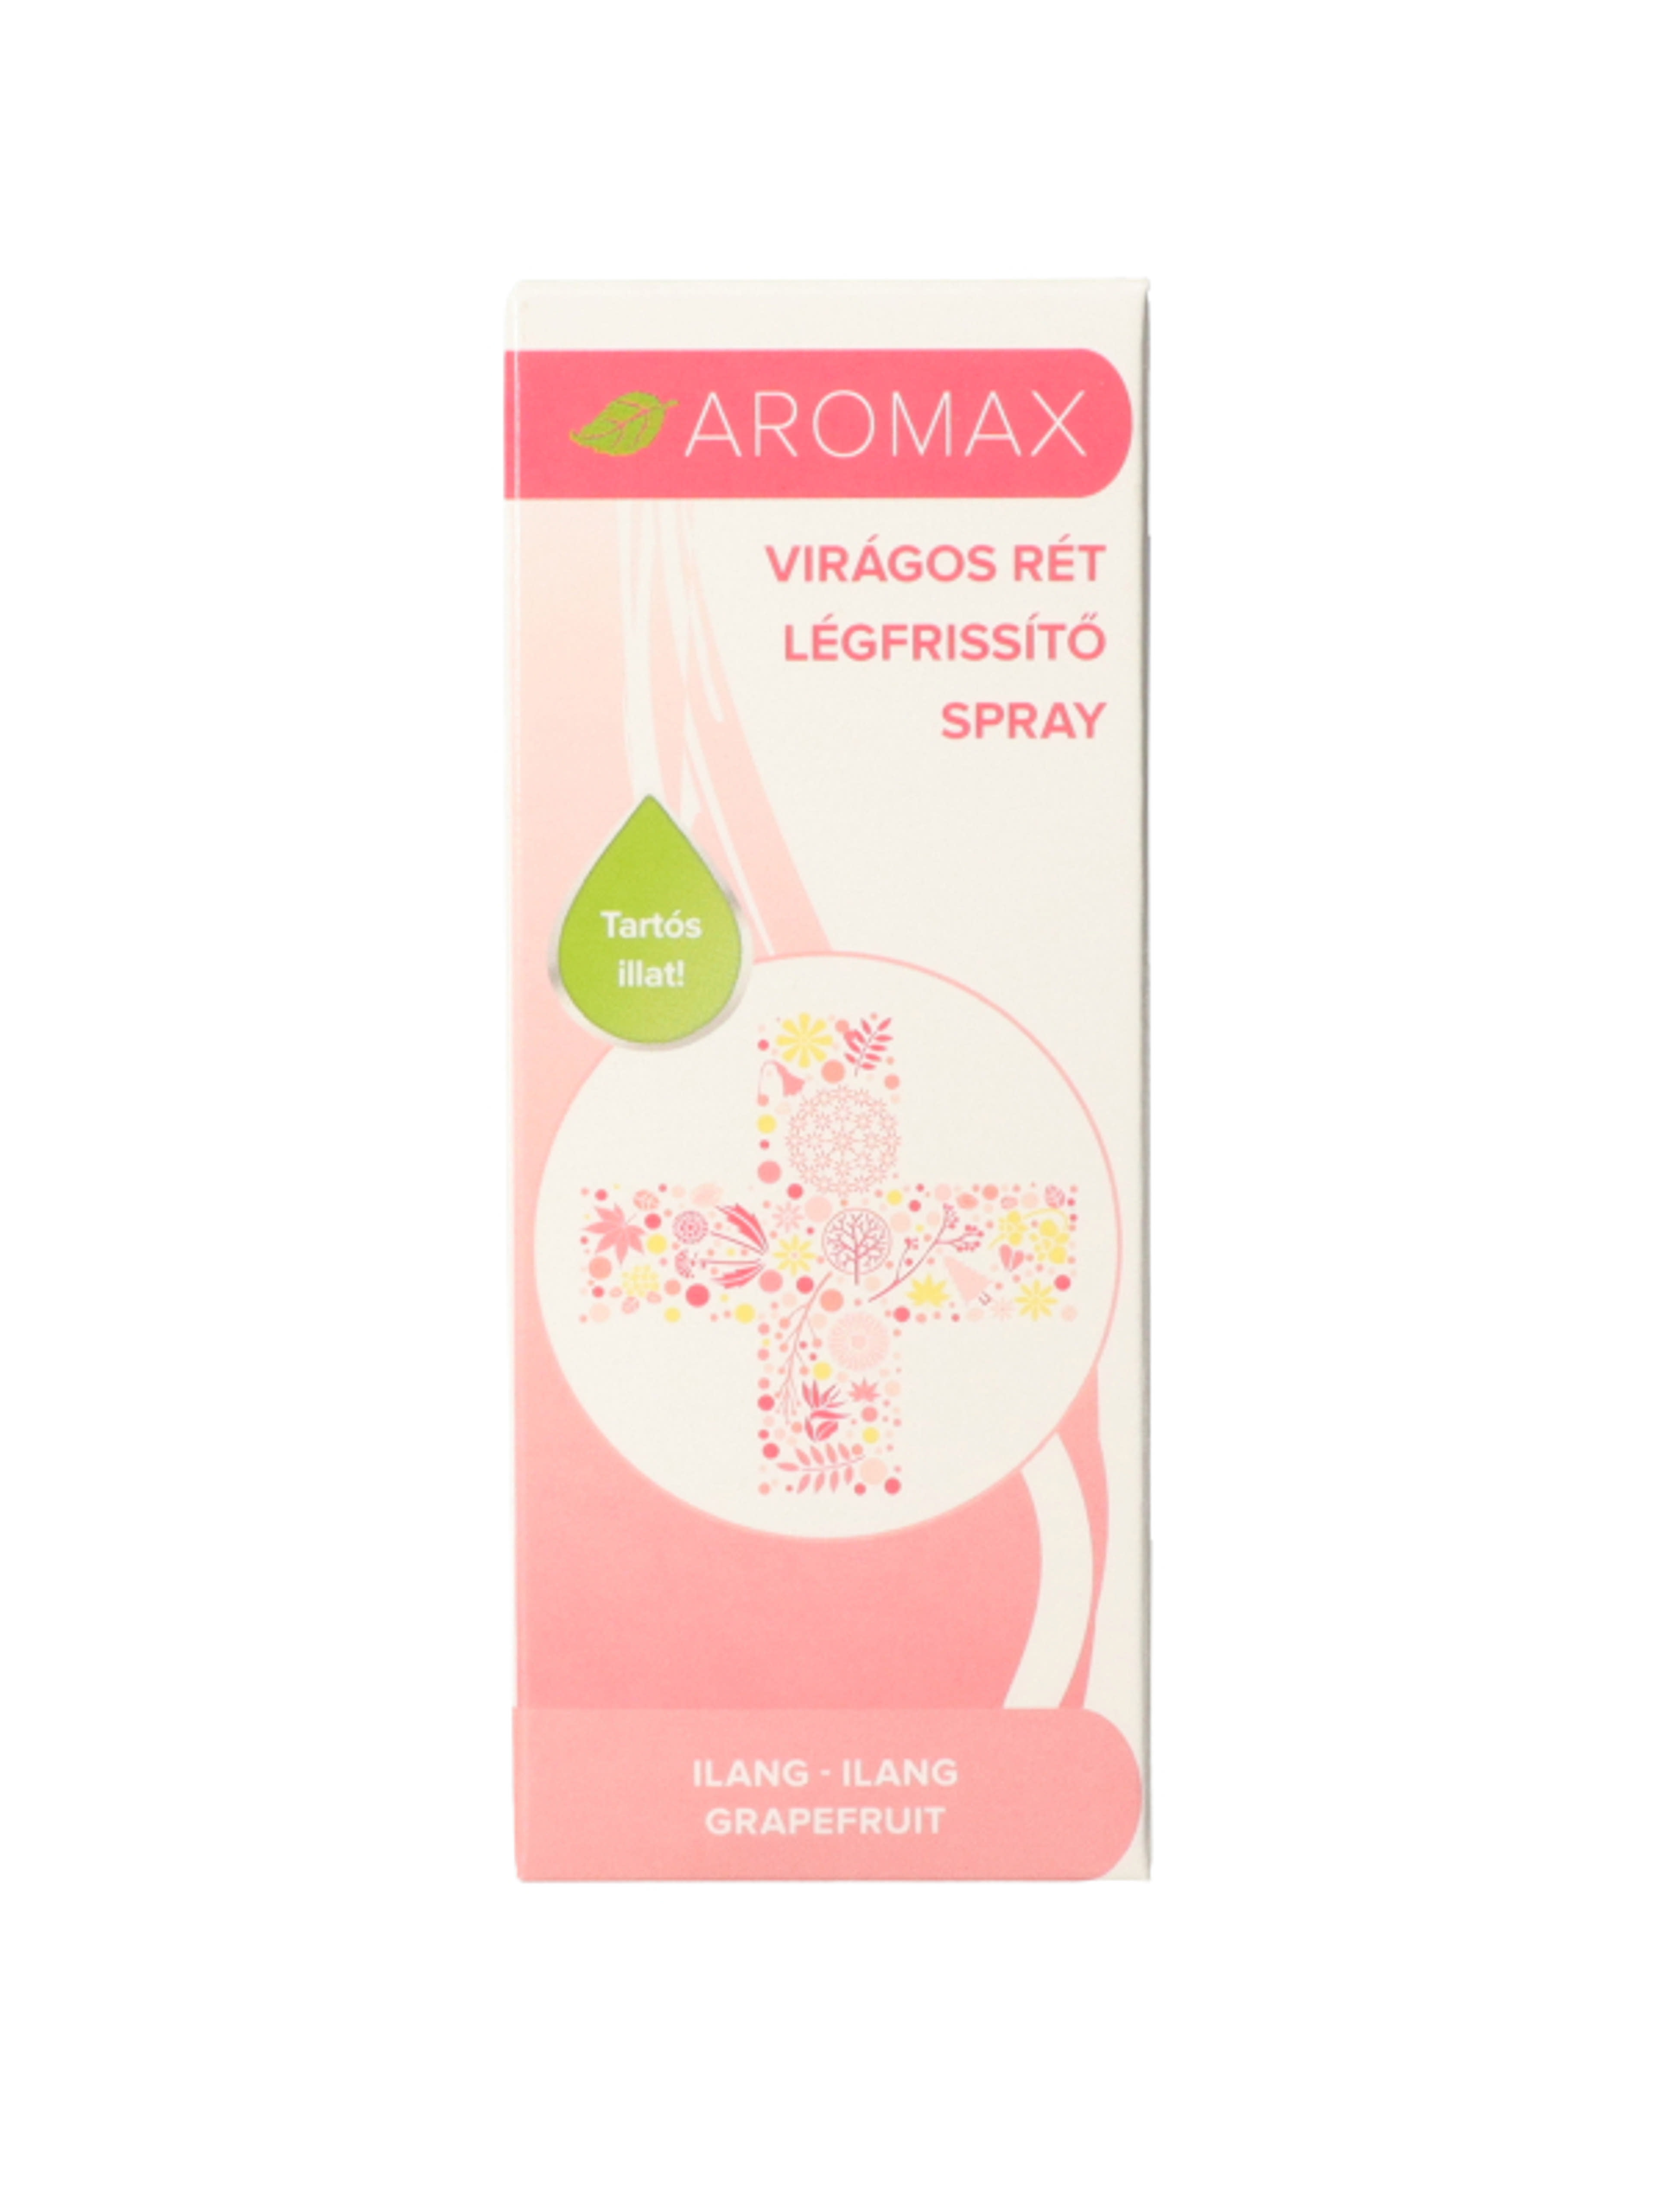 Aromax légfrissítő spray virágos rét - 20 ml